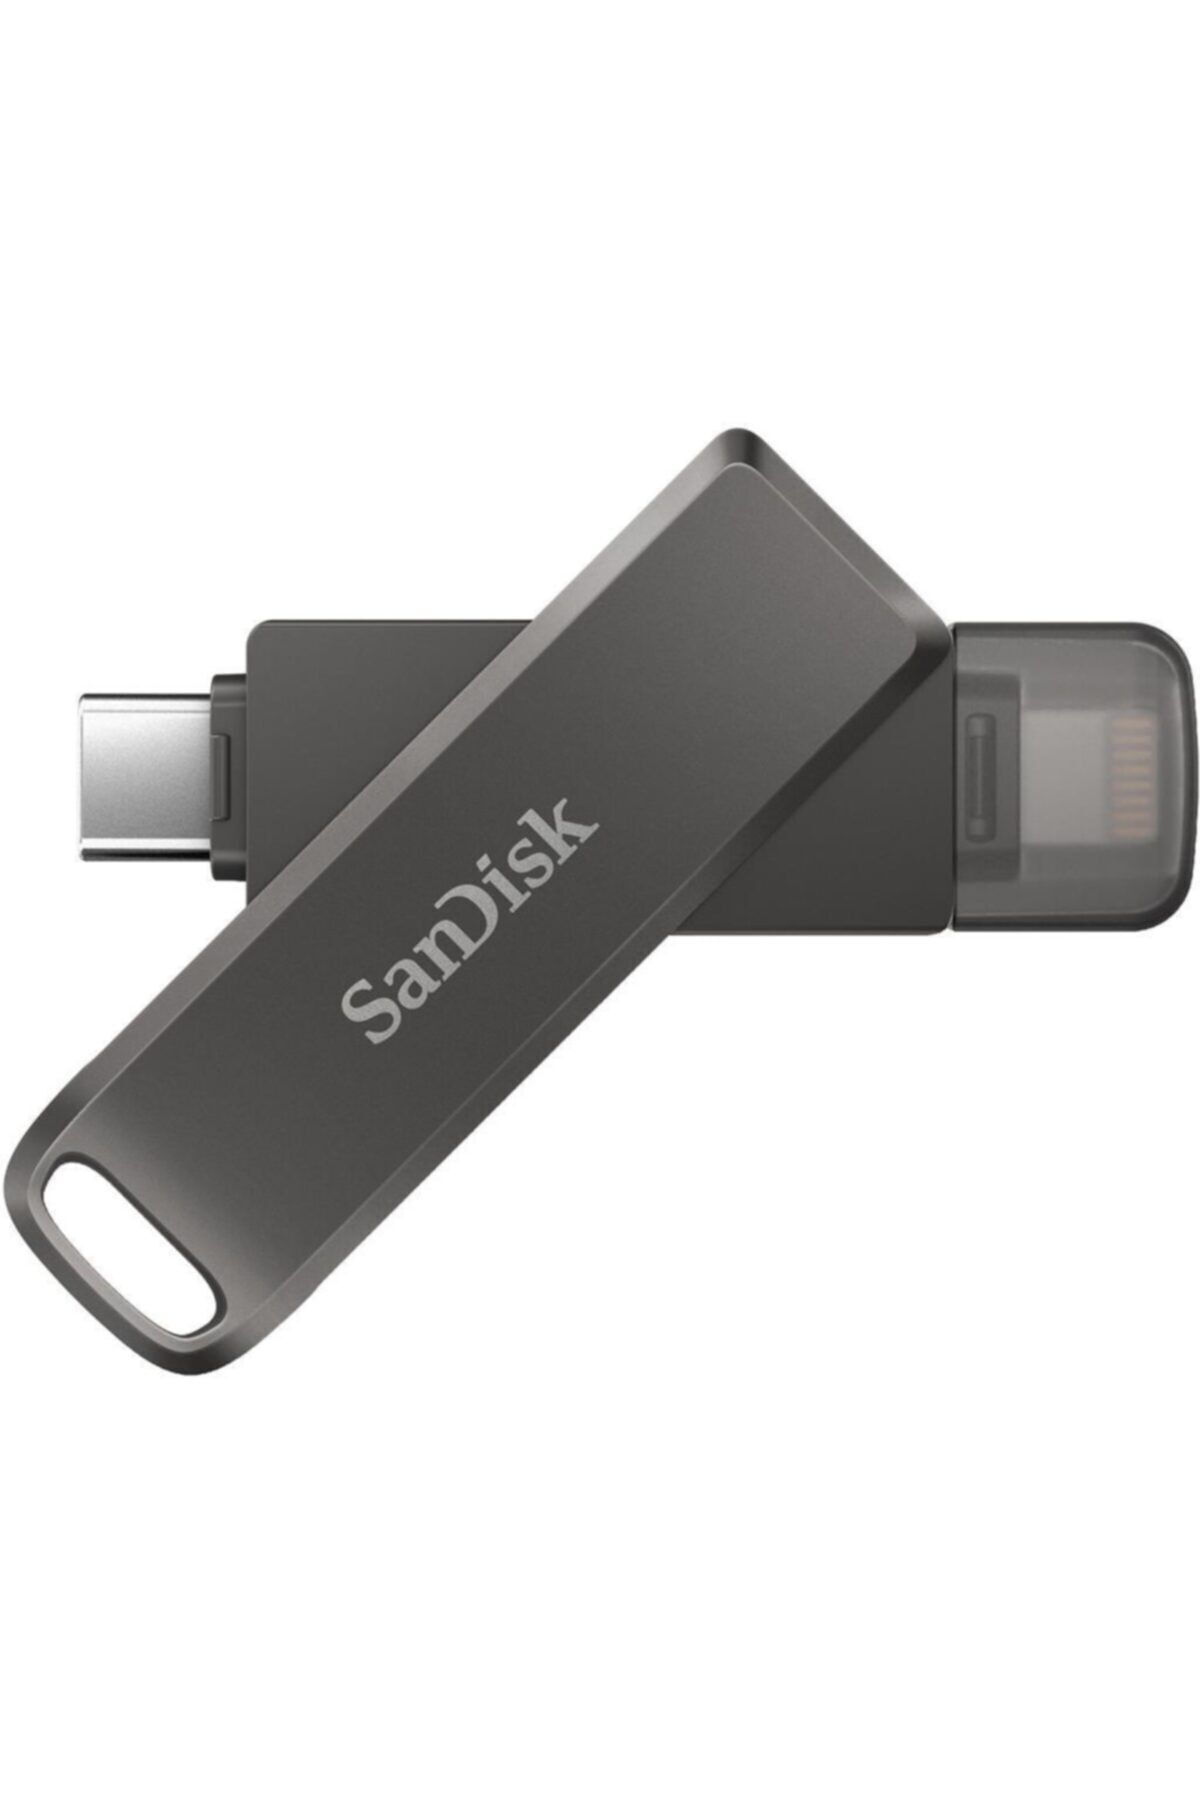 Sandisk 128gb Ixpand Luxe Iphone Usb Flash Bellek Sdıx70n-128g-gn6nn